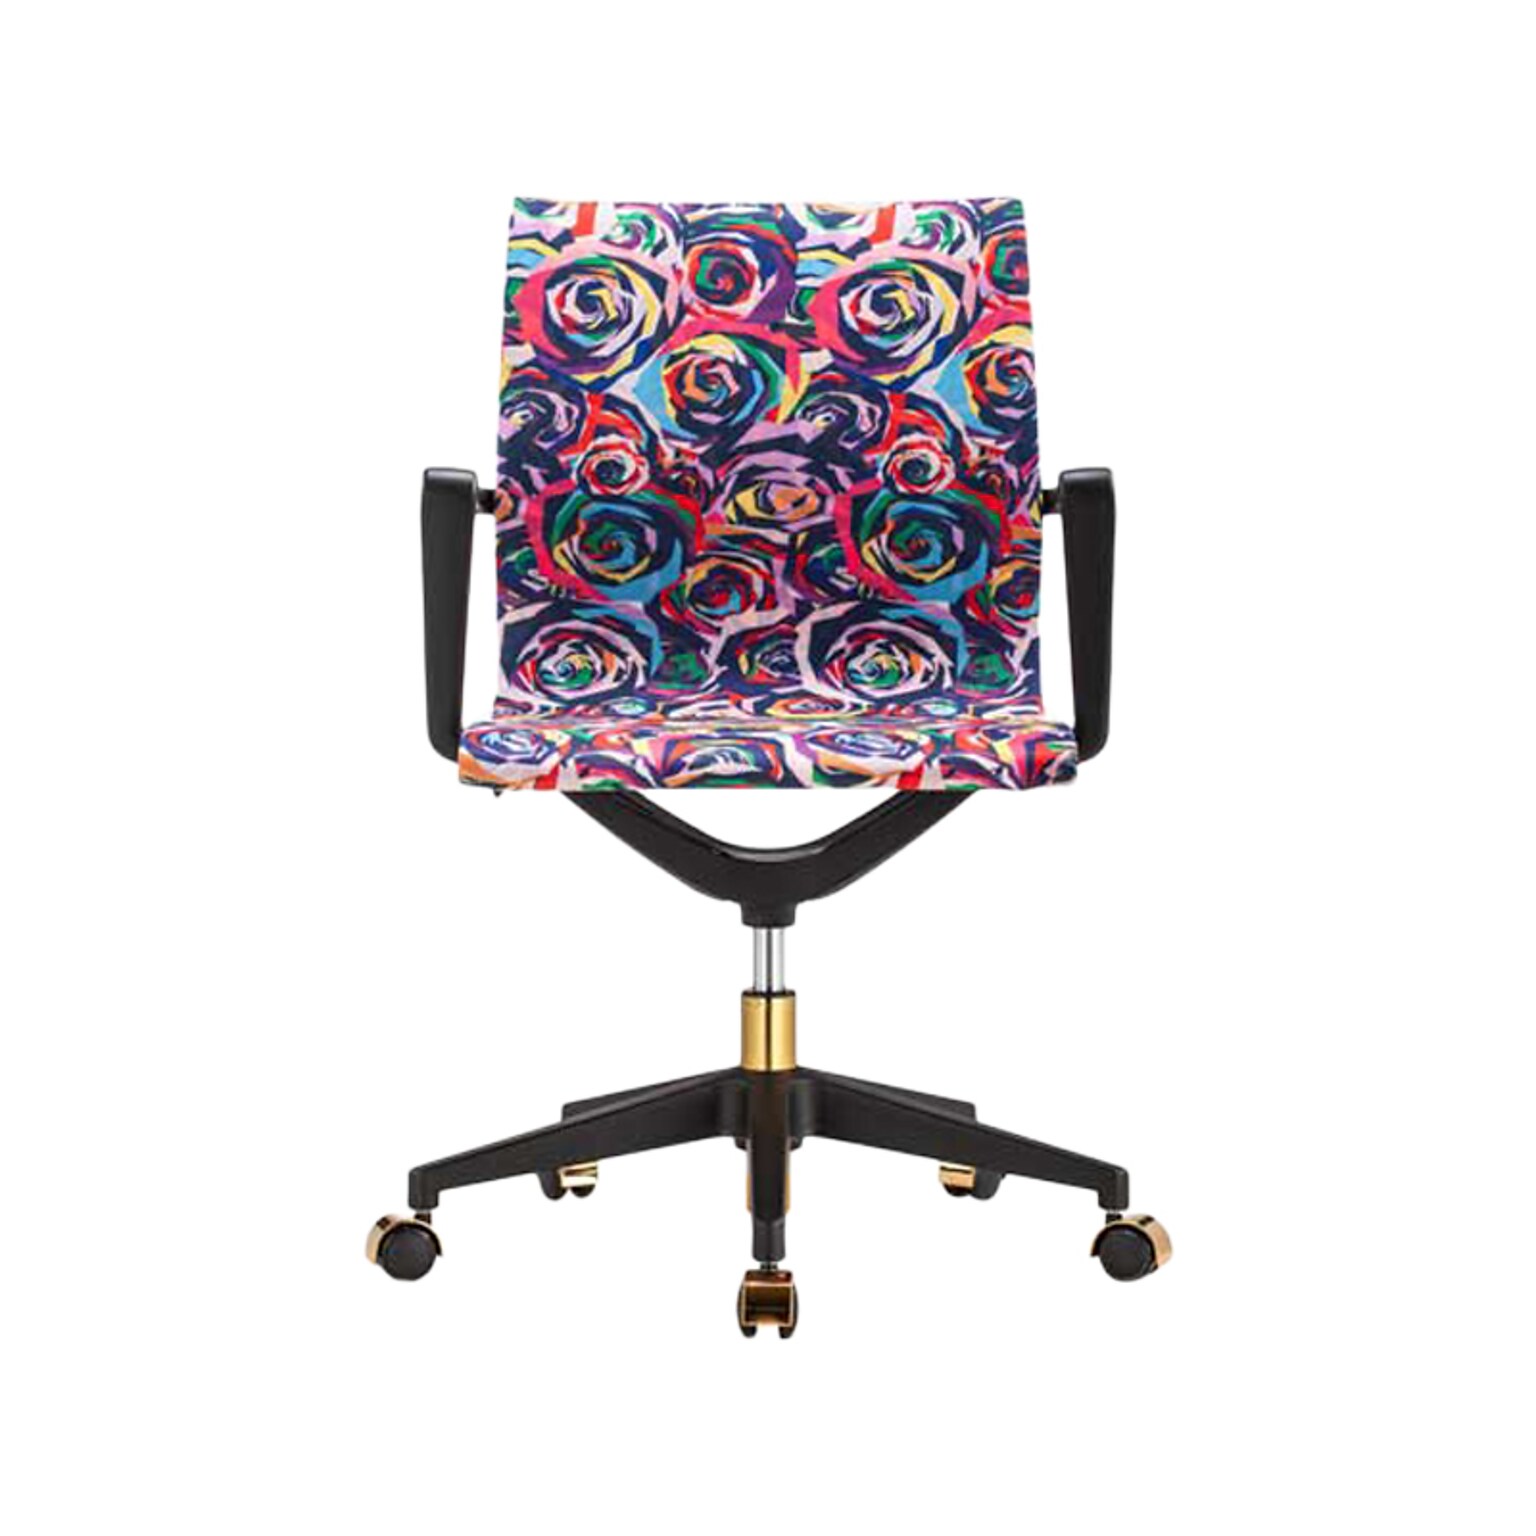 The Raynor Group Elizabeth Sutton Wynwood Fabric Swivel Task Chair, Multi Rose Black Gold (K-ESWY-BLK-ROSE-GLD)